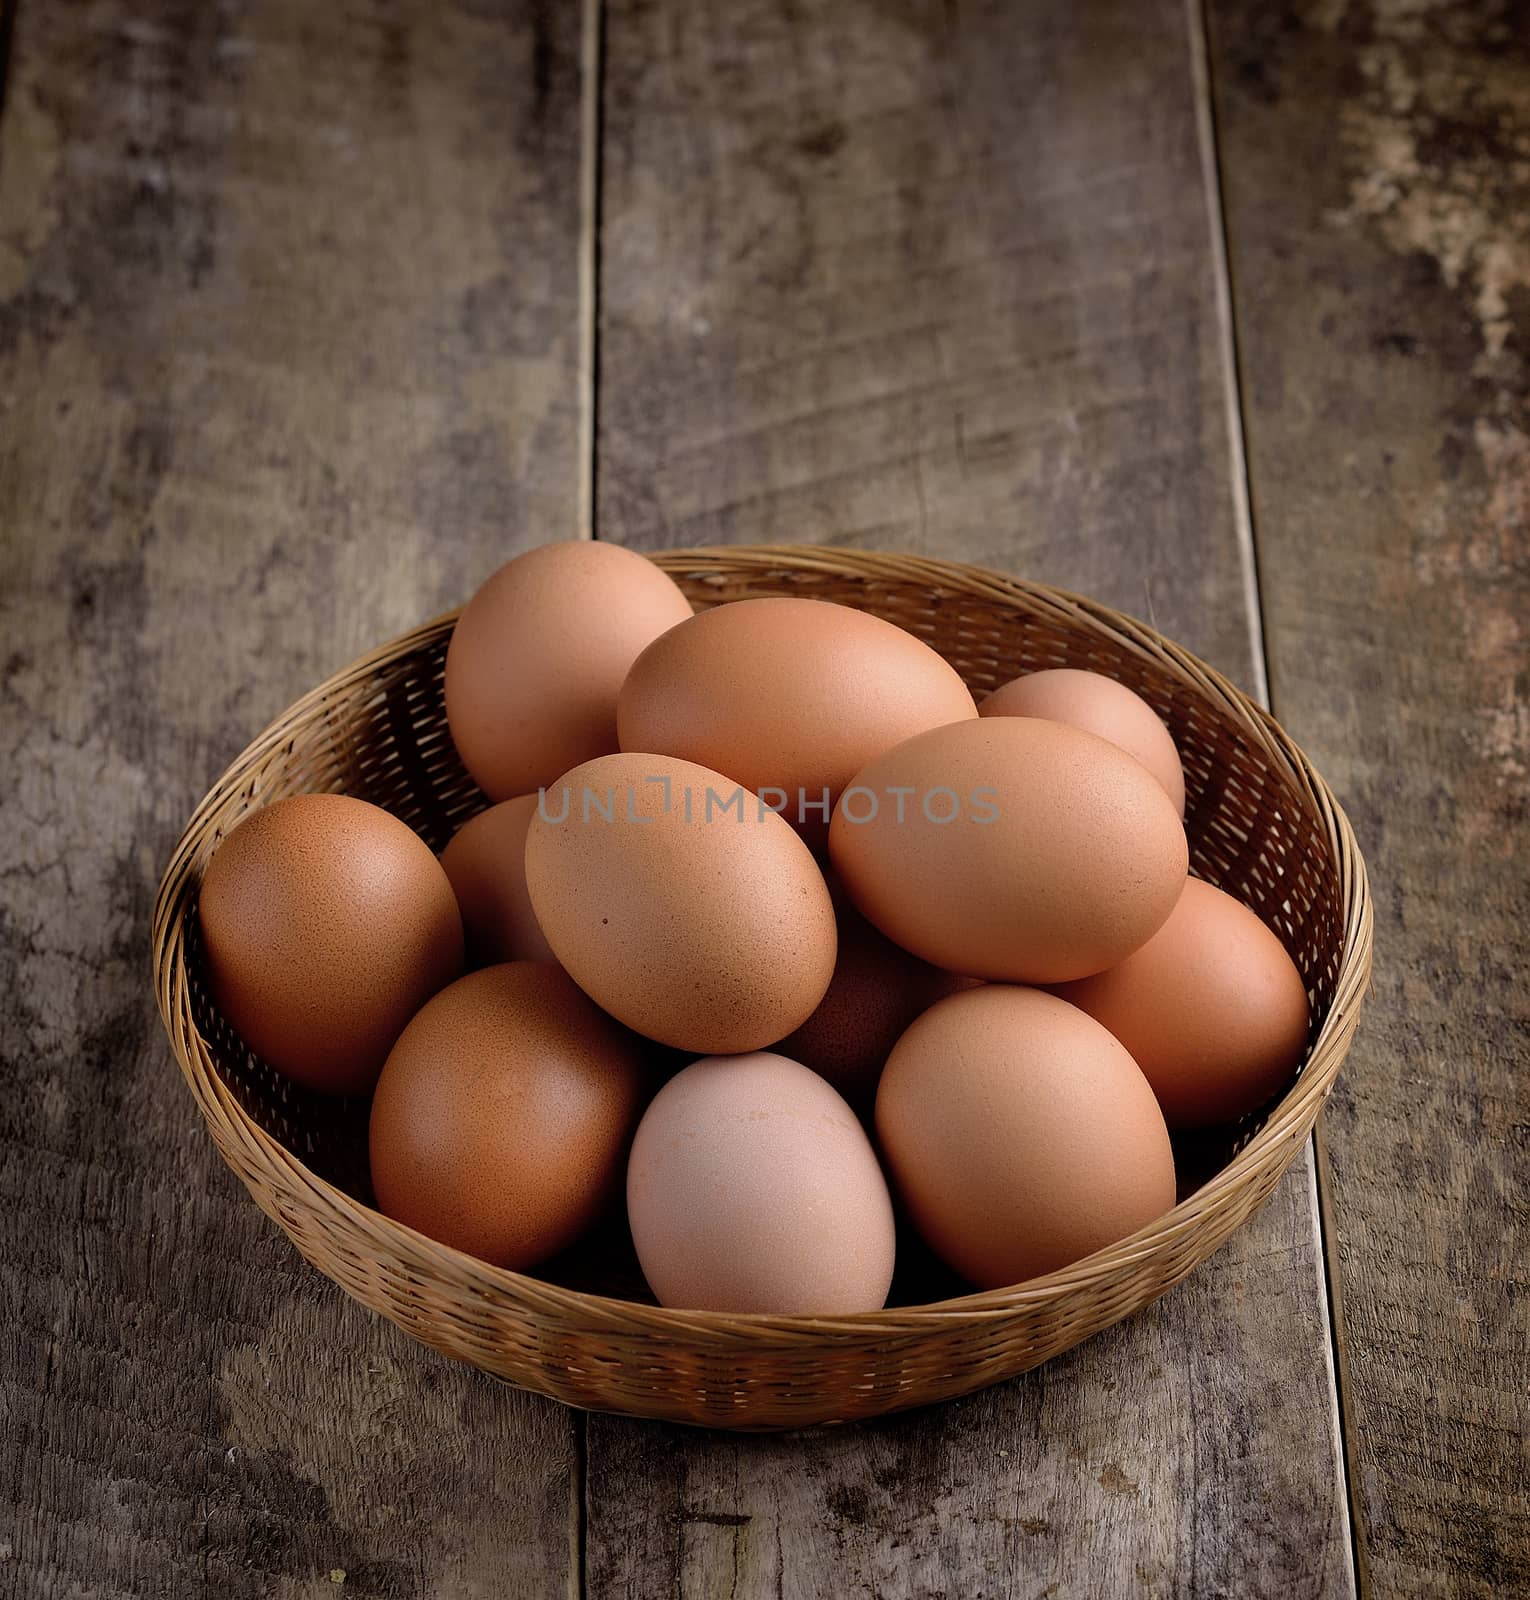  egg in a basket on wodden table